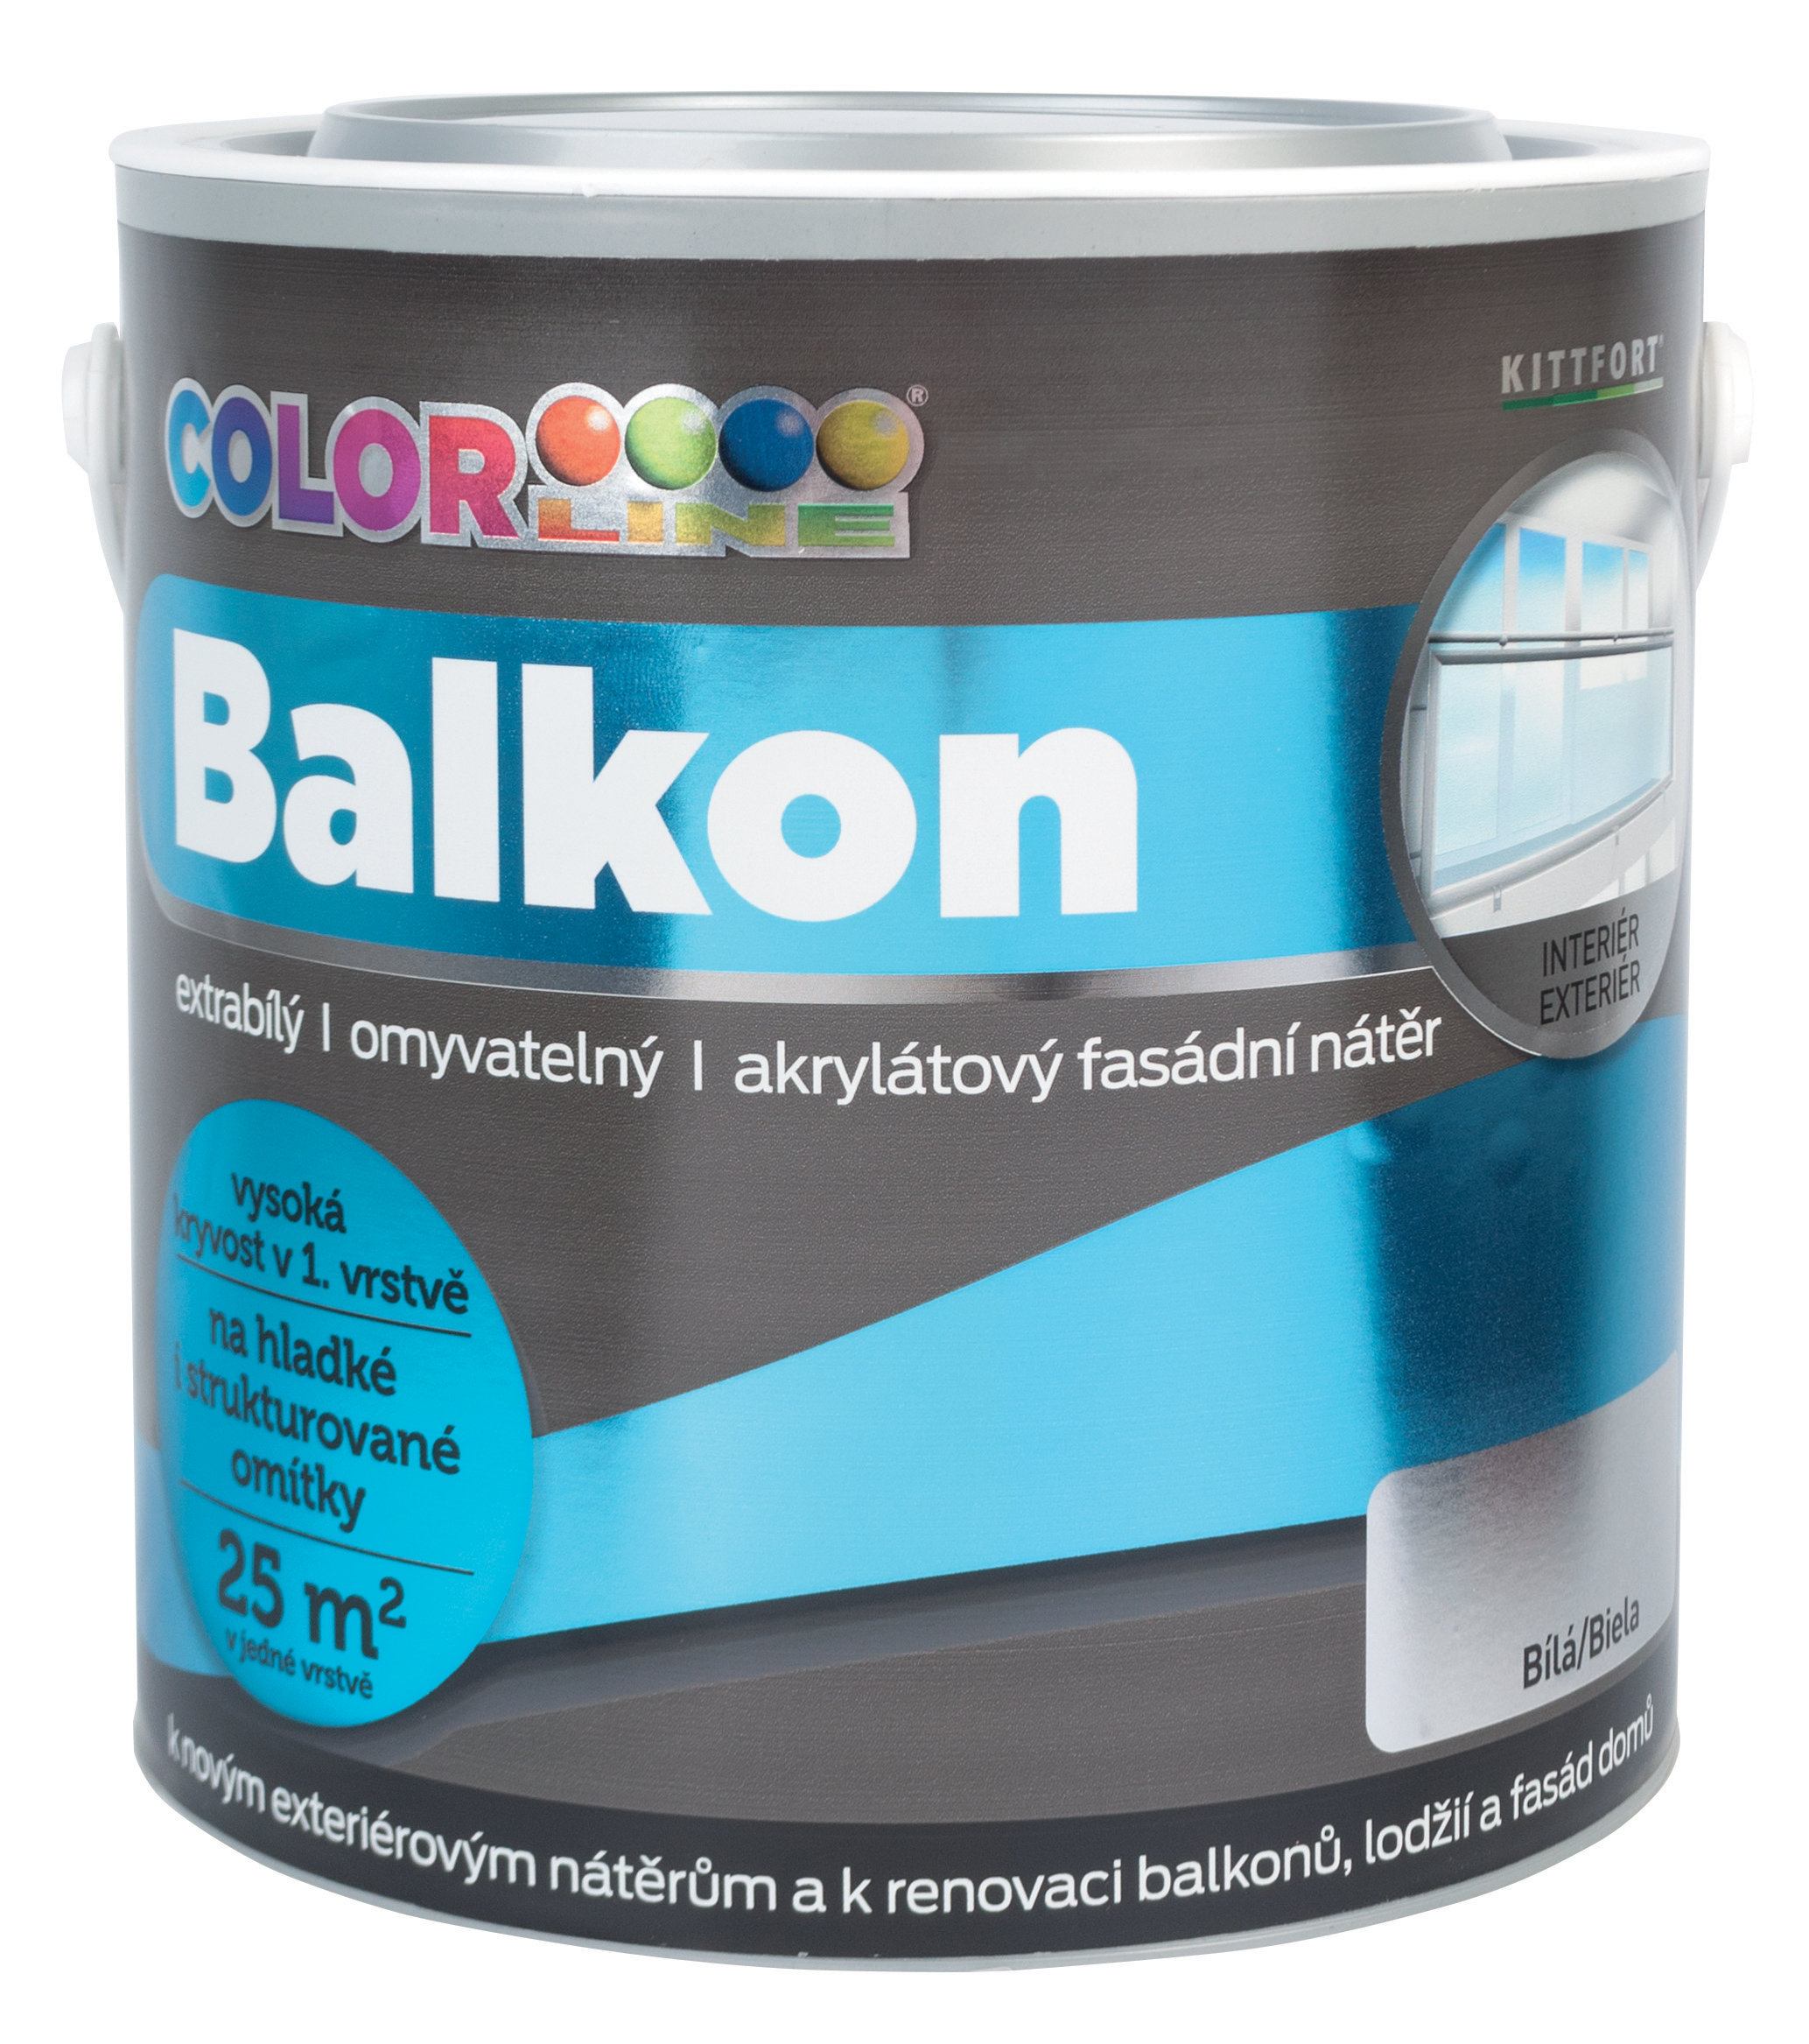 Colorline Balkon